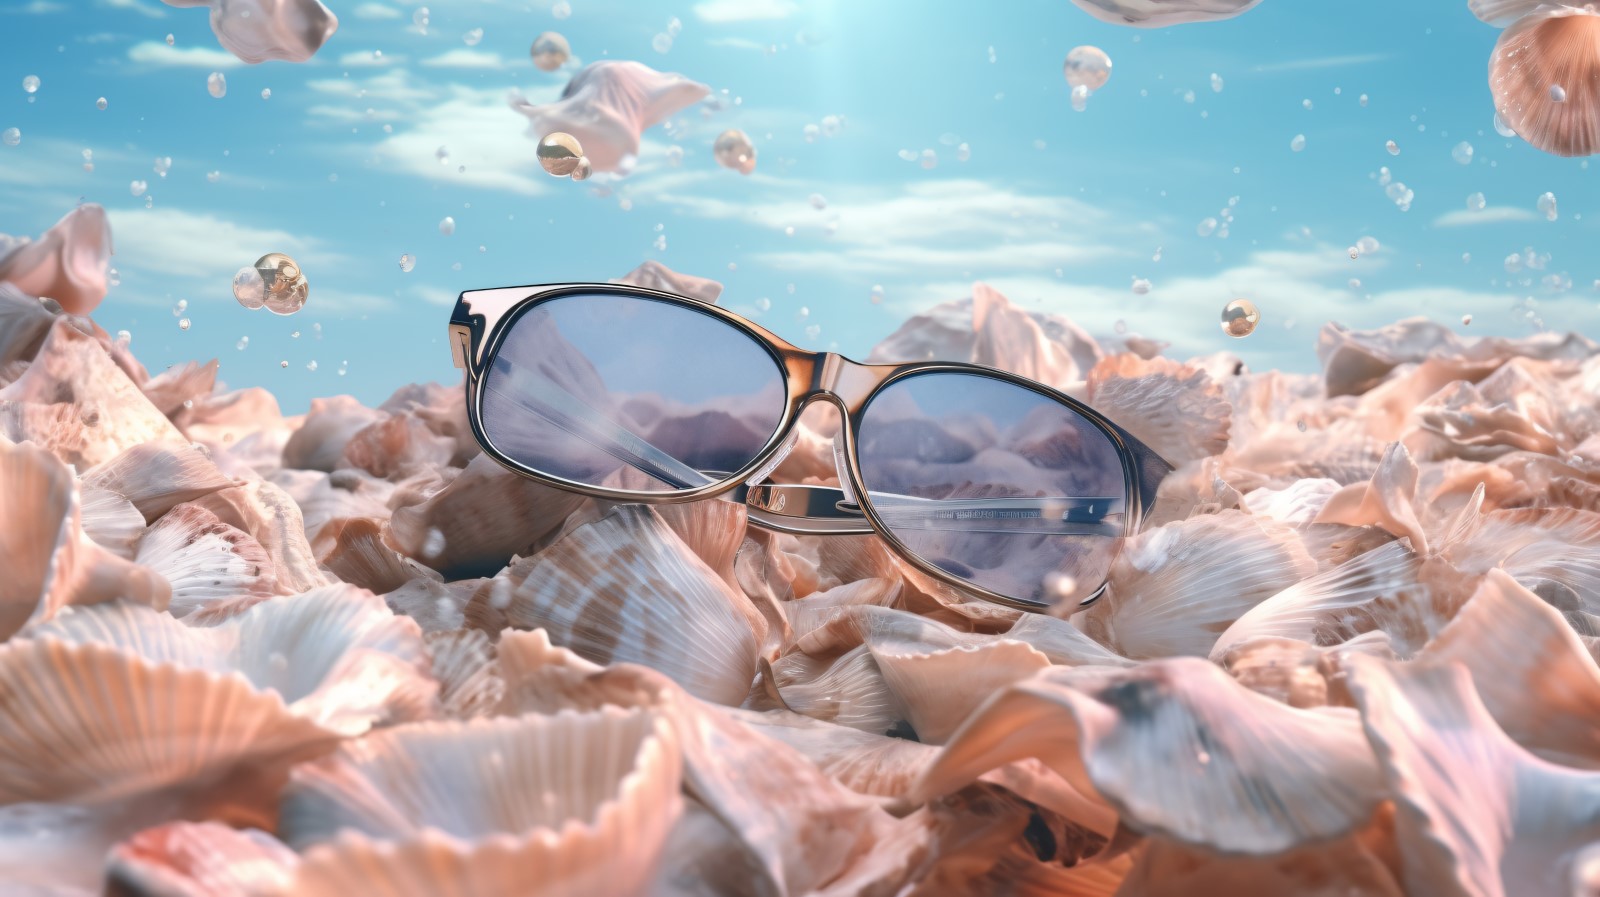 Beach sunglasses and seashells falling summer background 317